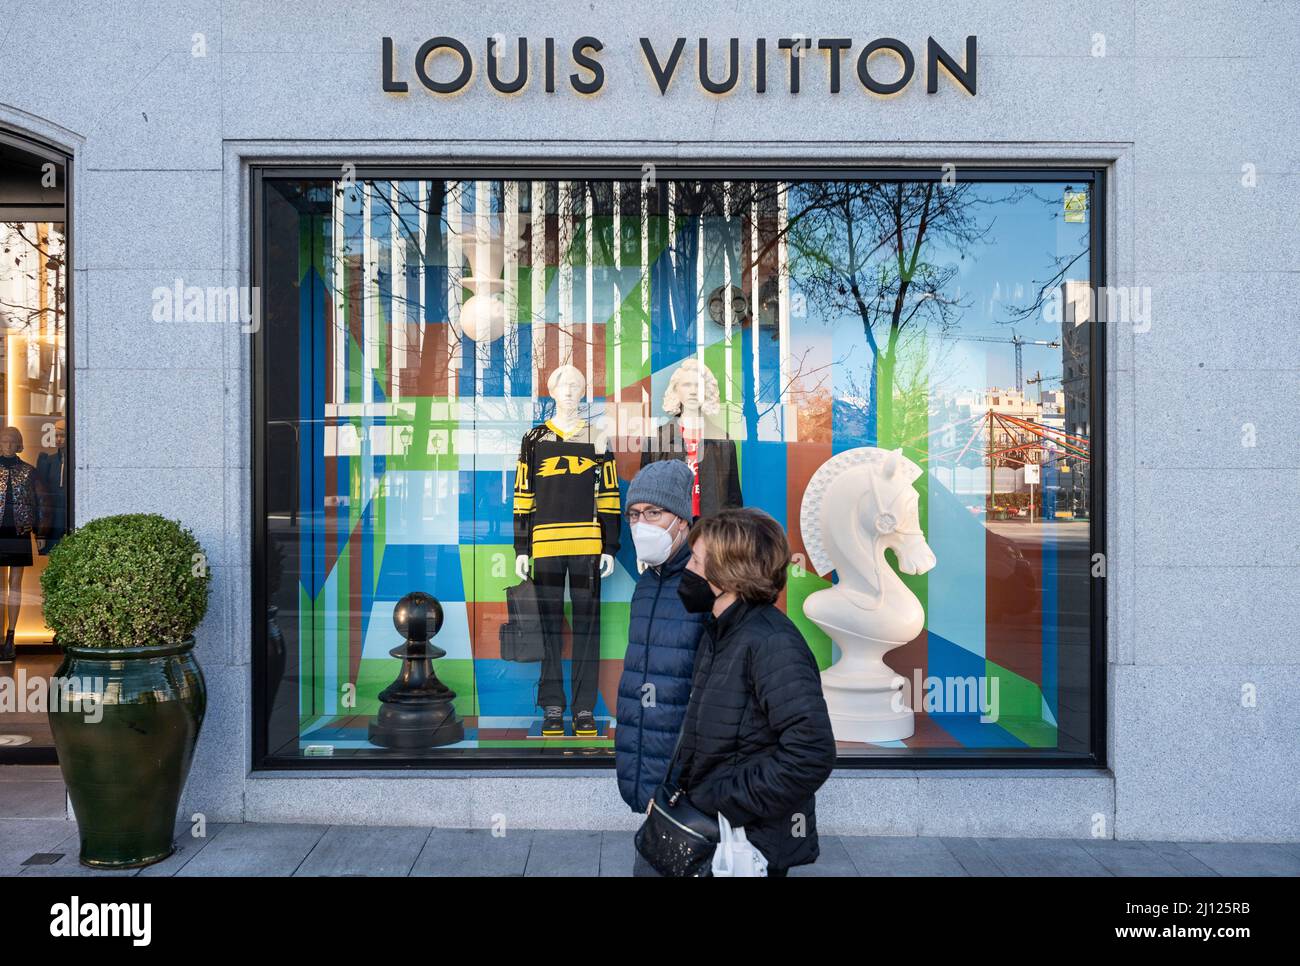 Louis Vuitton - aventura mall - florida - August 20, 2018 